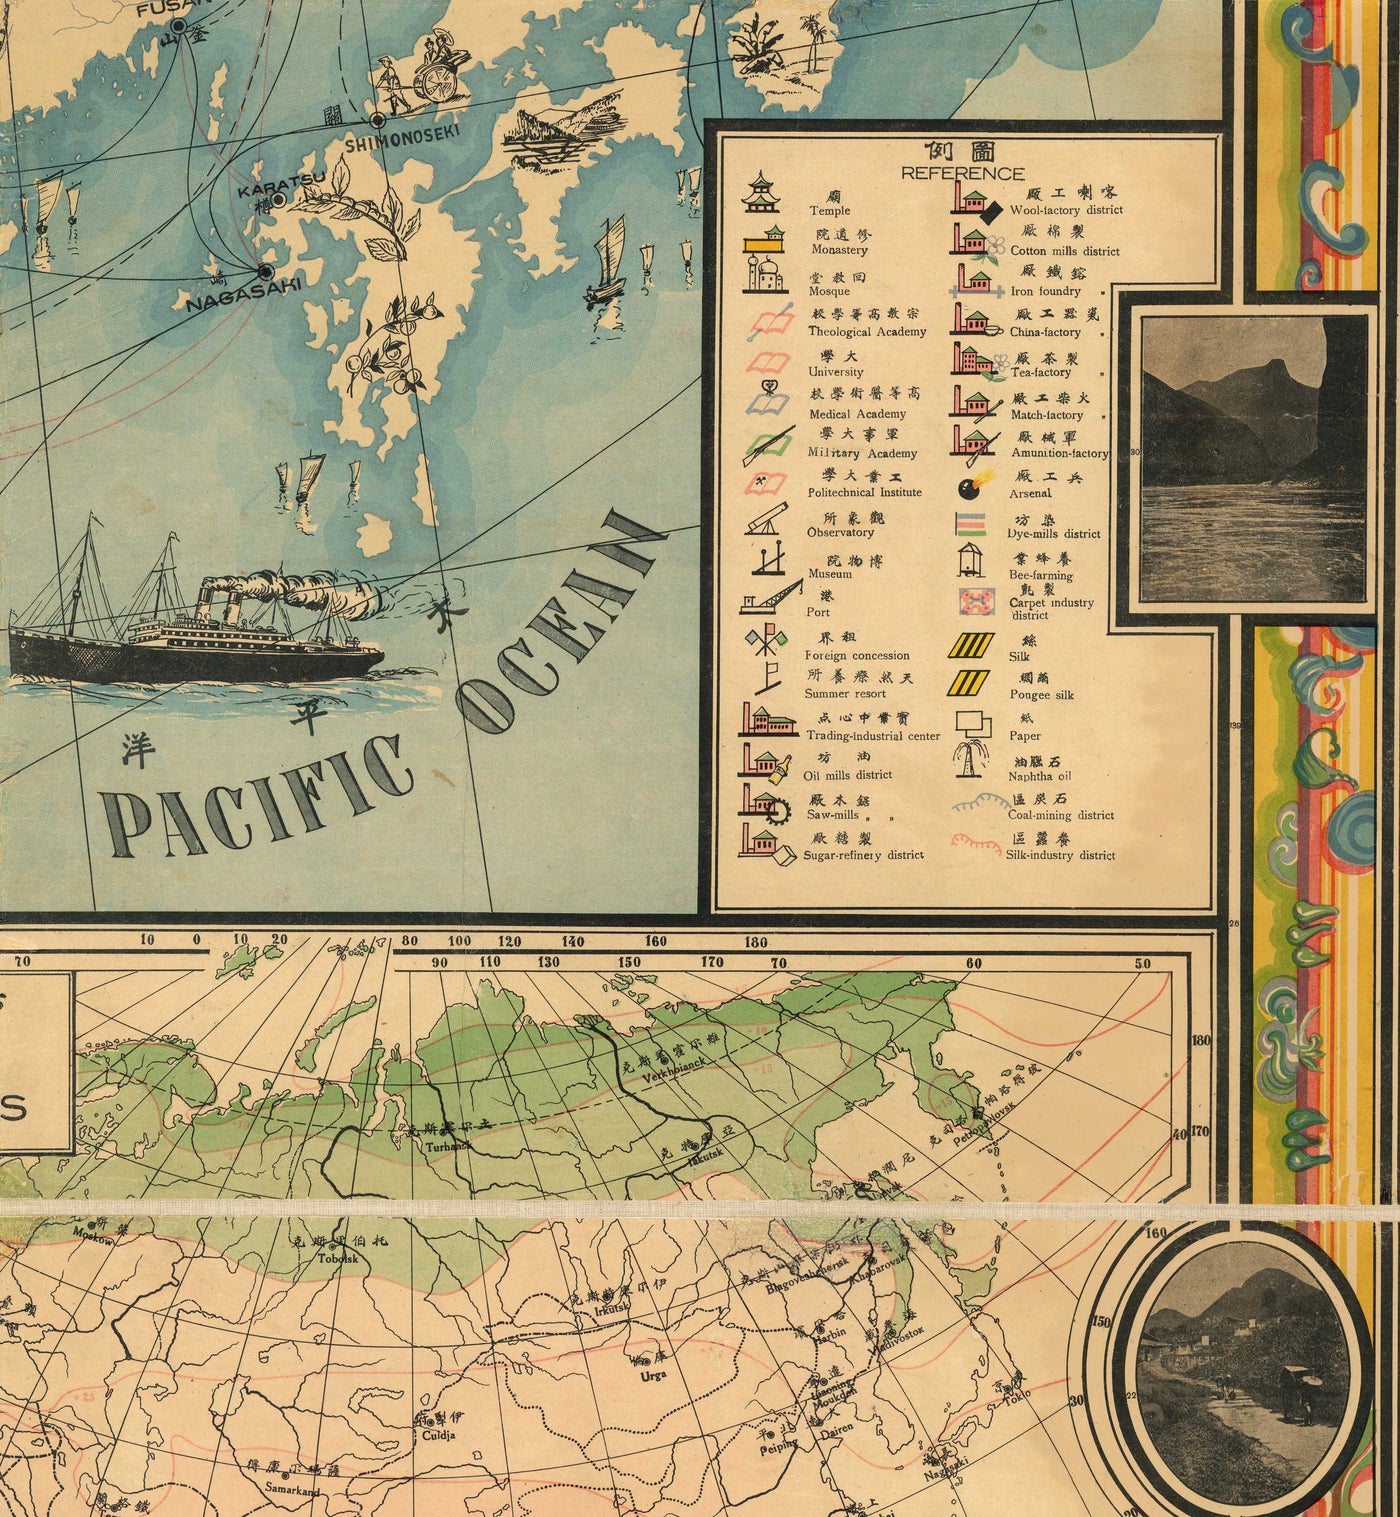 Rare Old Pictorial Map of China in 1931 by G Primakoff - Taiwan, Hainan, Hong Kong, Hanoi, Liaoning